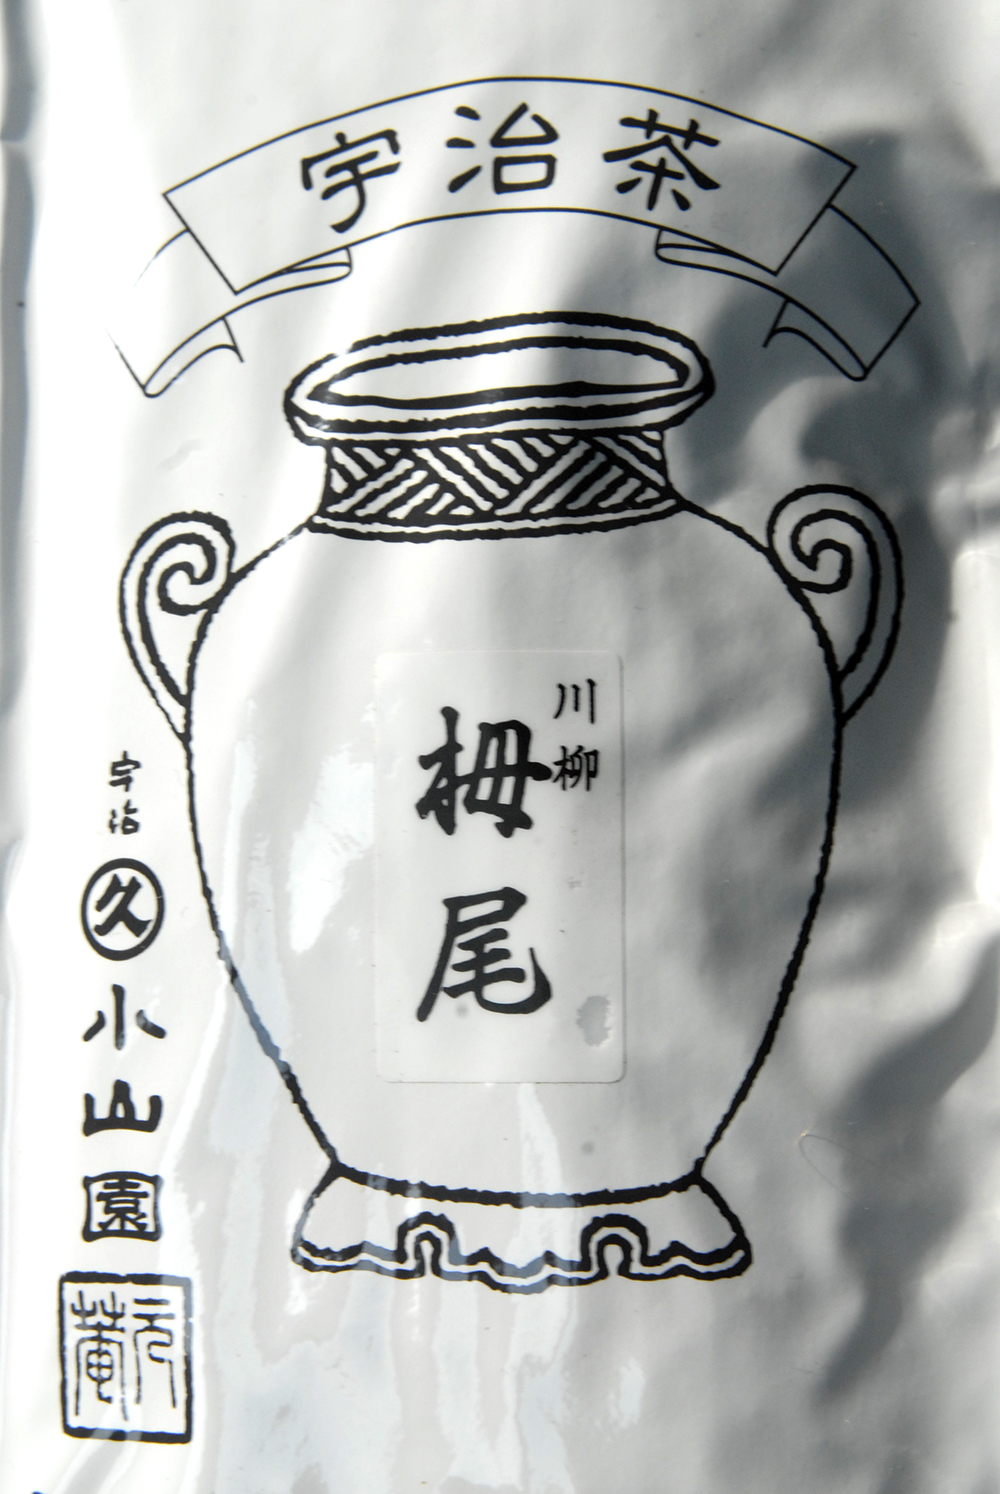 Kawayanagi Toganoo, Marukyu Koyamaen, japán tea